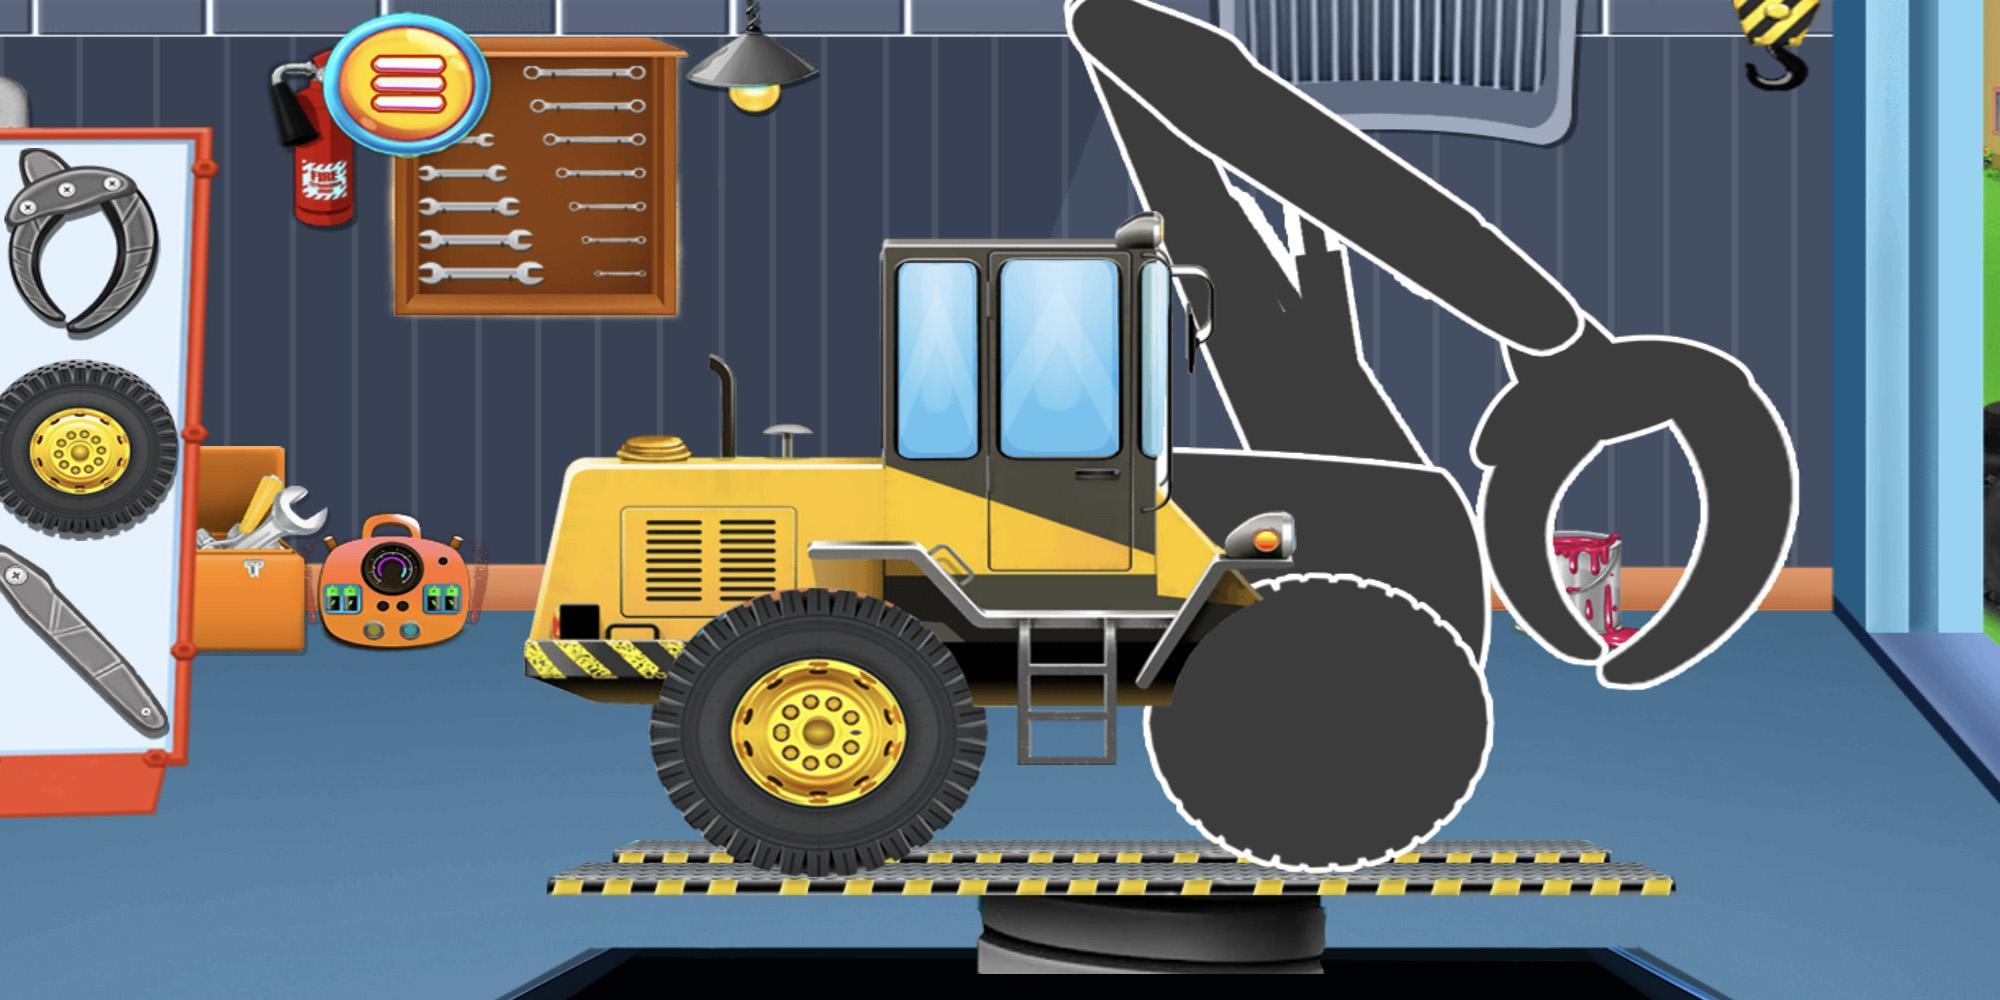 Construction Vehicles & Trucks - Games for Kids 1.9.0 Screenshot 3